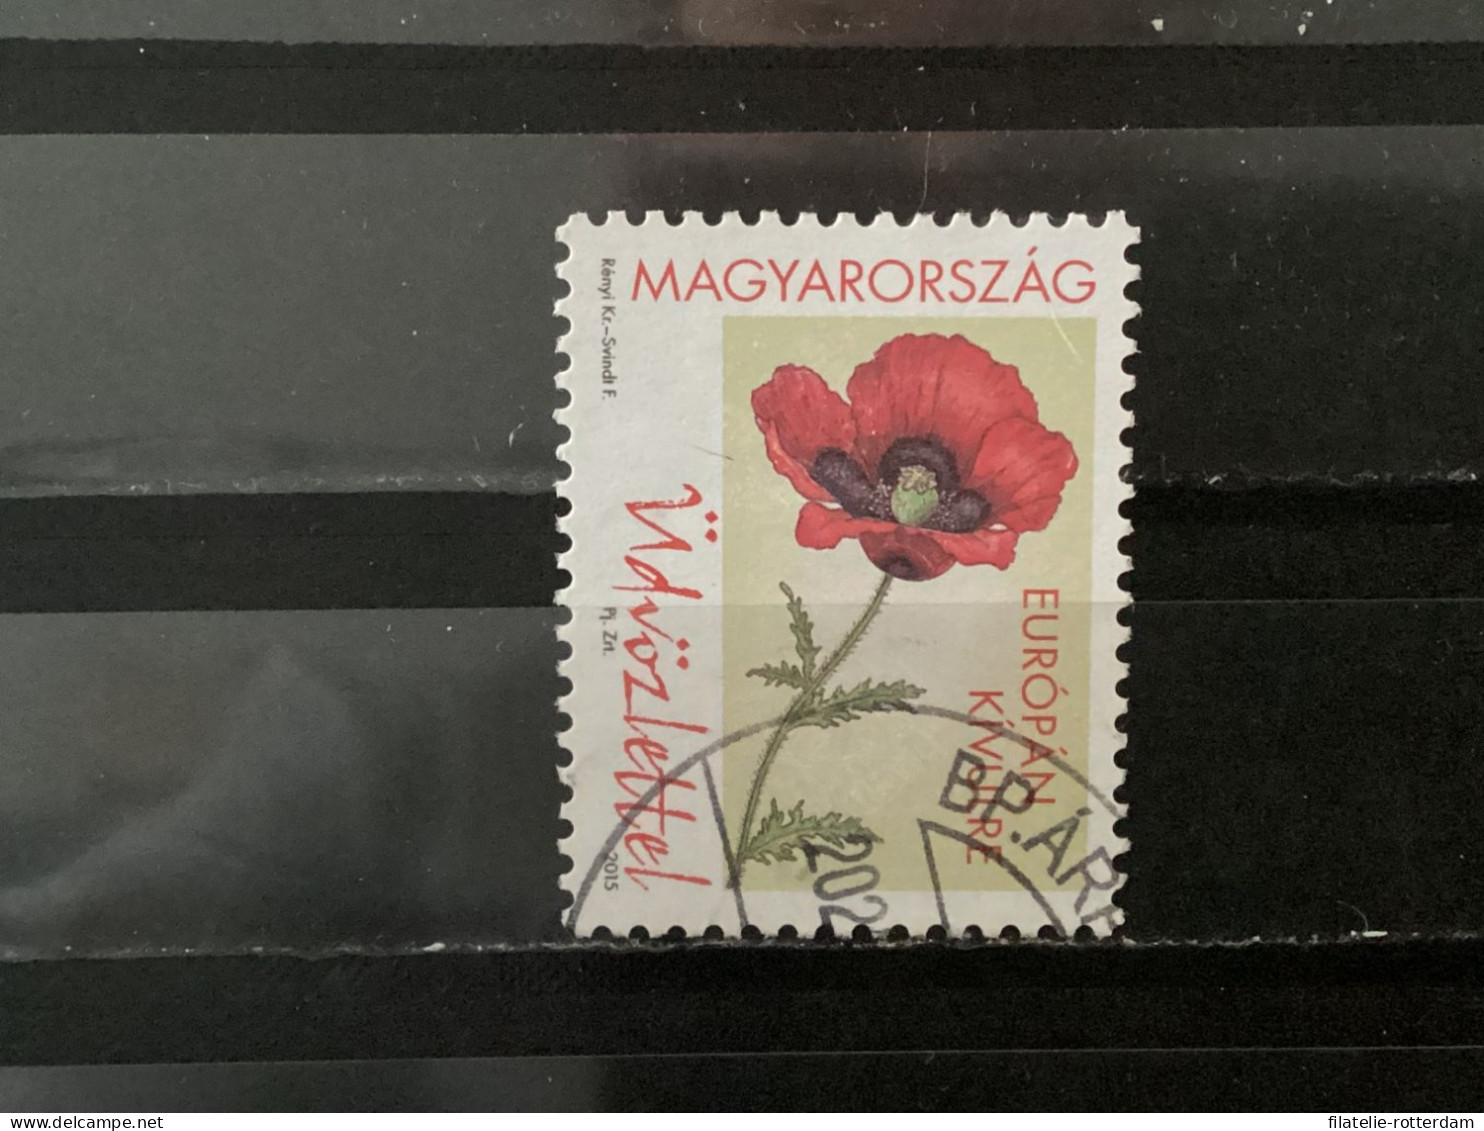 Hungary / Hongarije - Flowers 2016 - Used Stamps